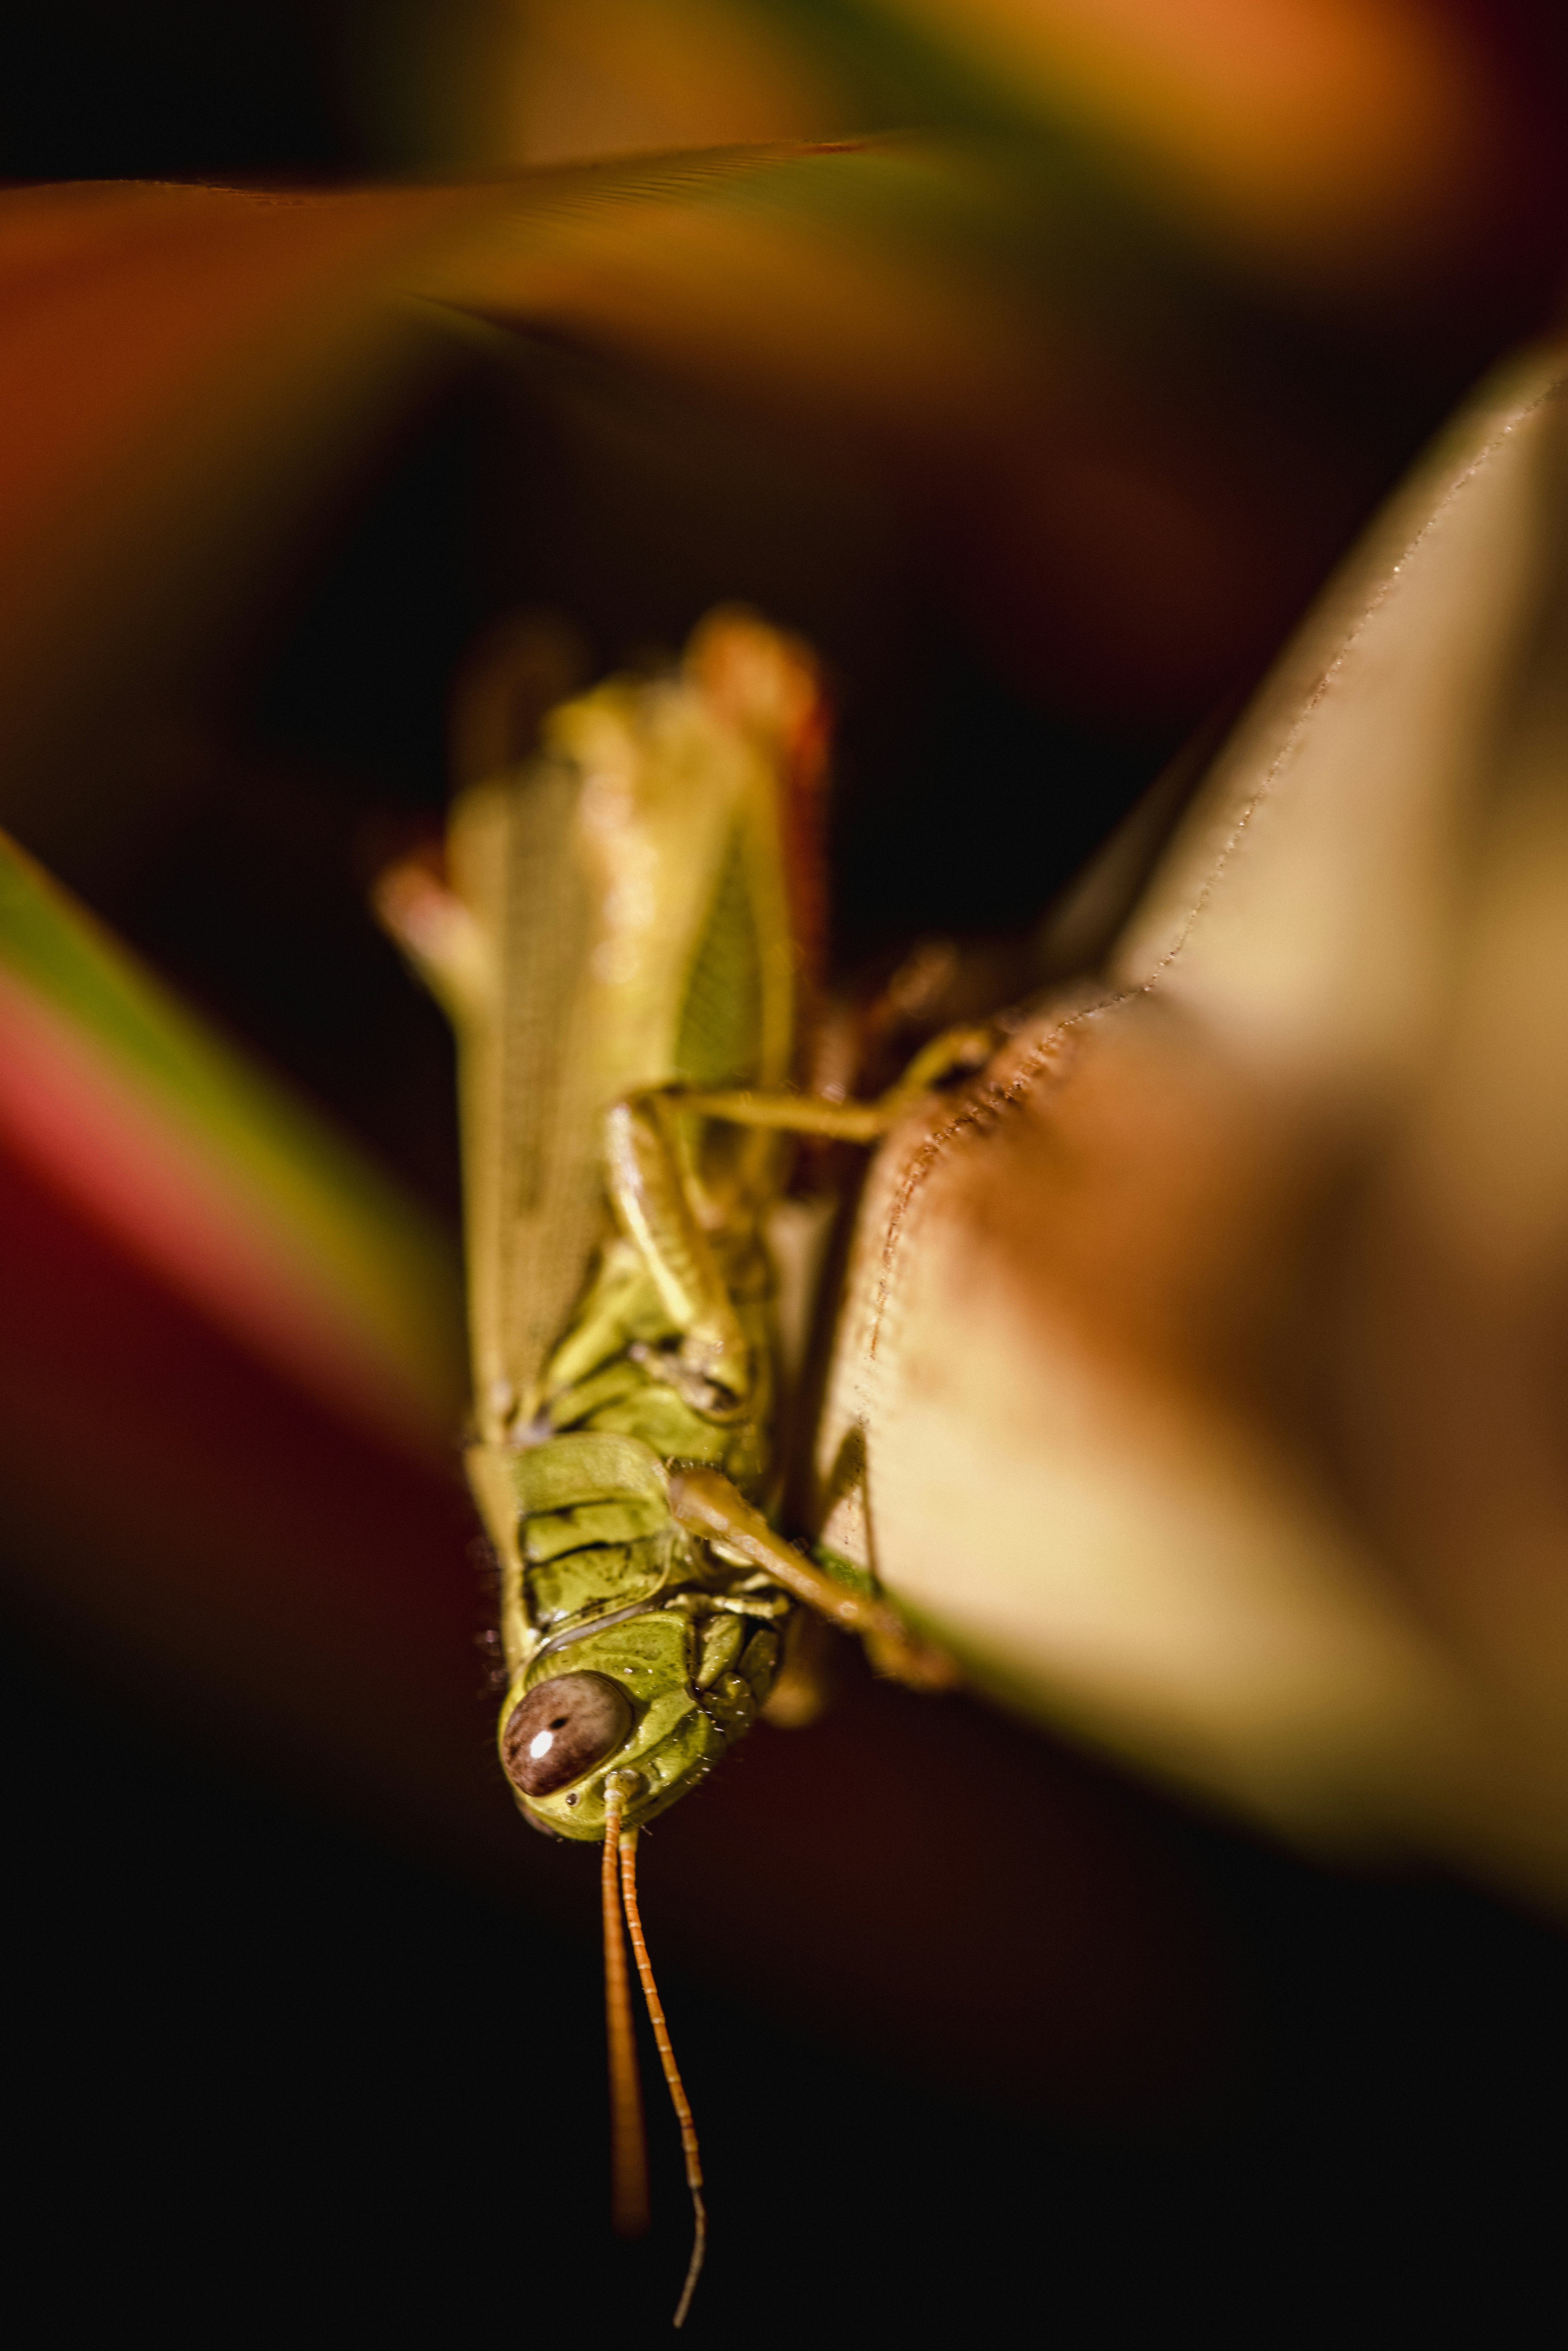 green grasshopper perched on brown stem in tilt shift lens